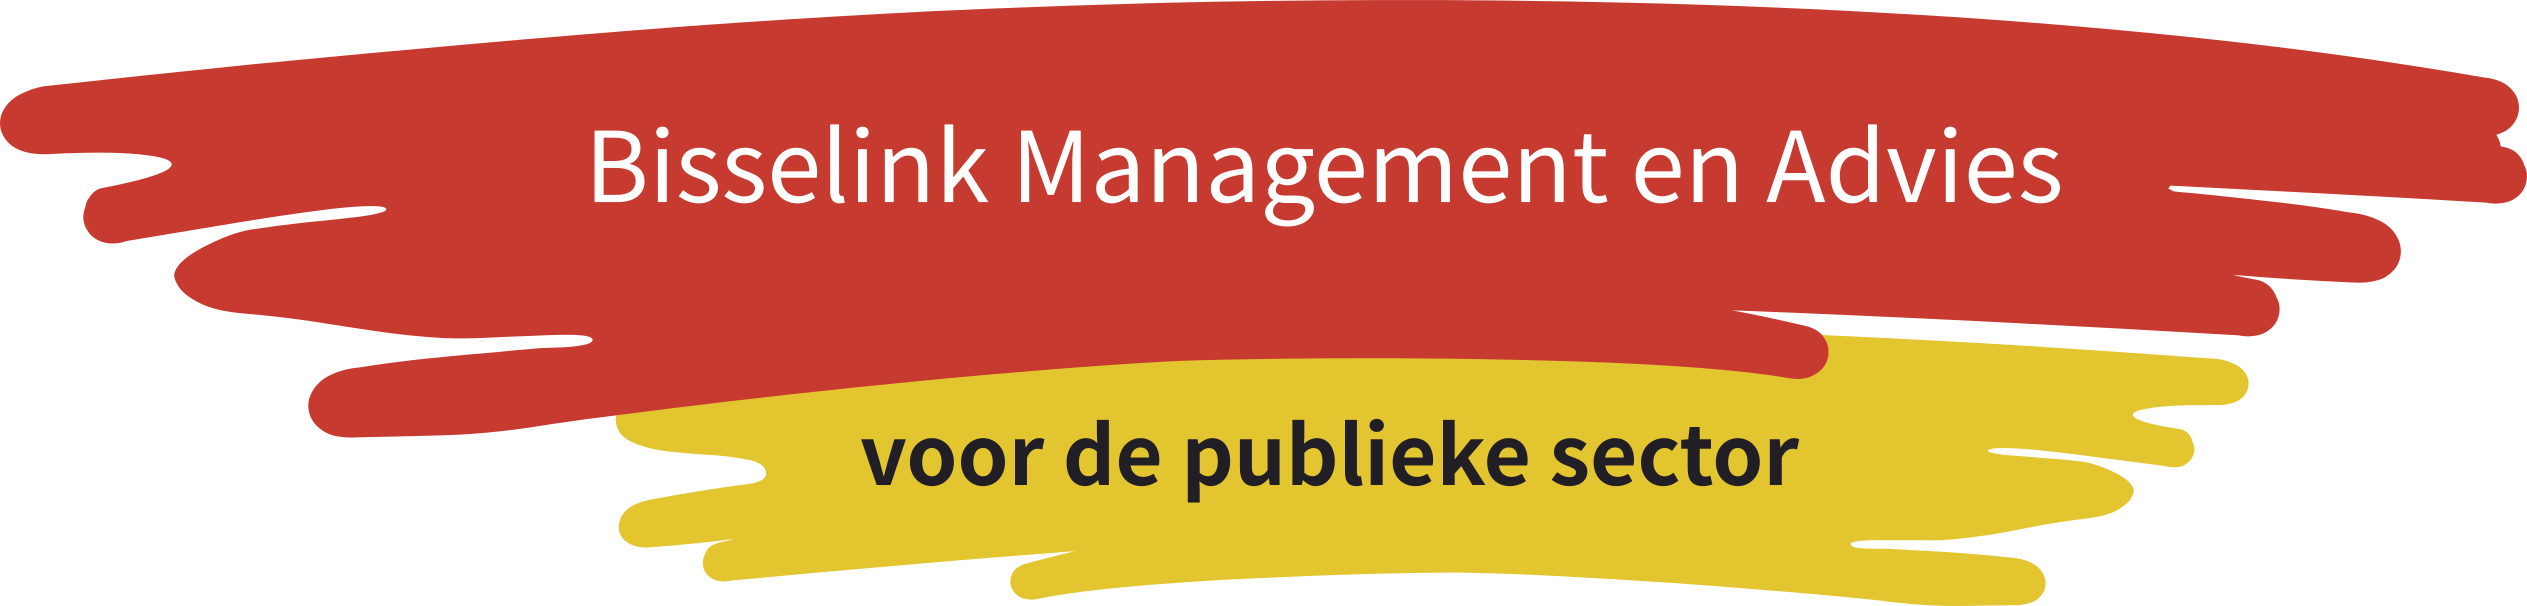 Bisselink Management en Advies